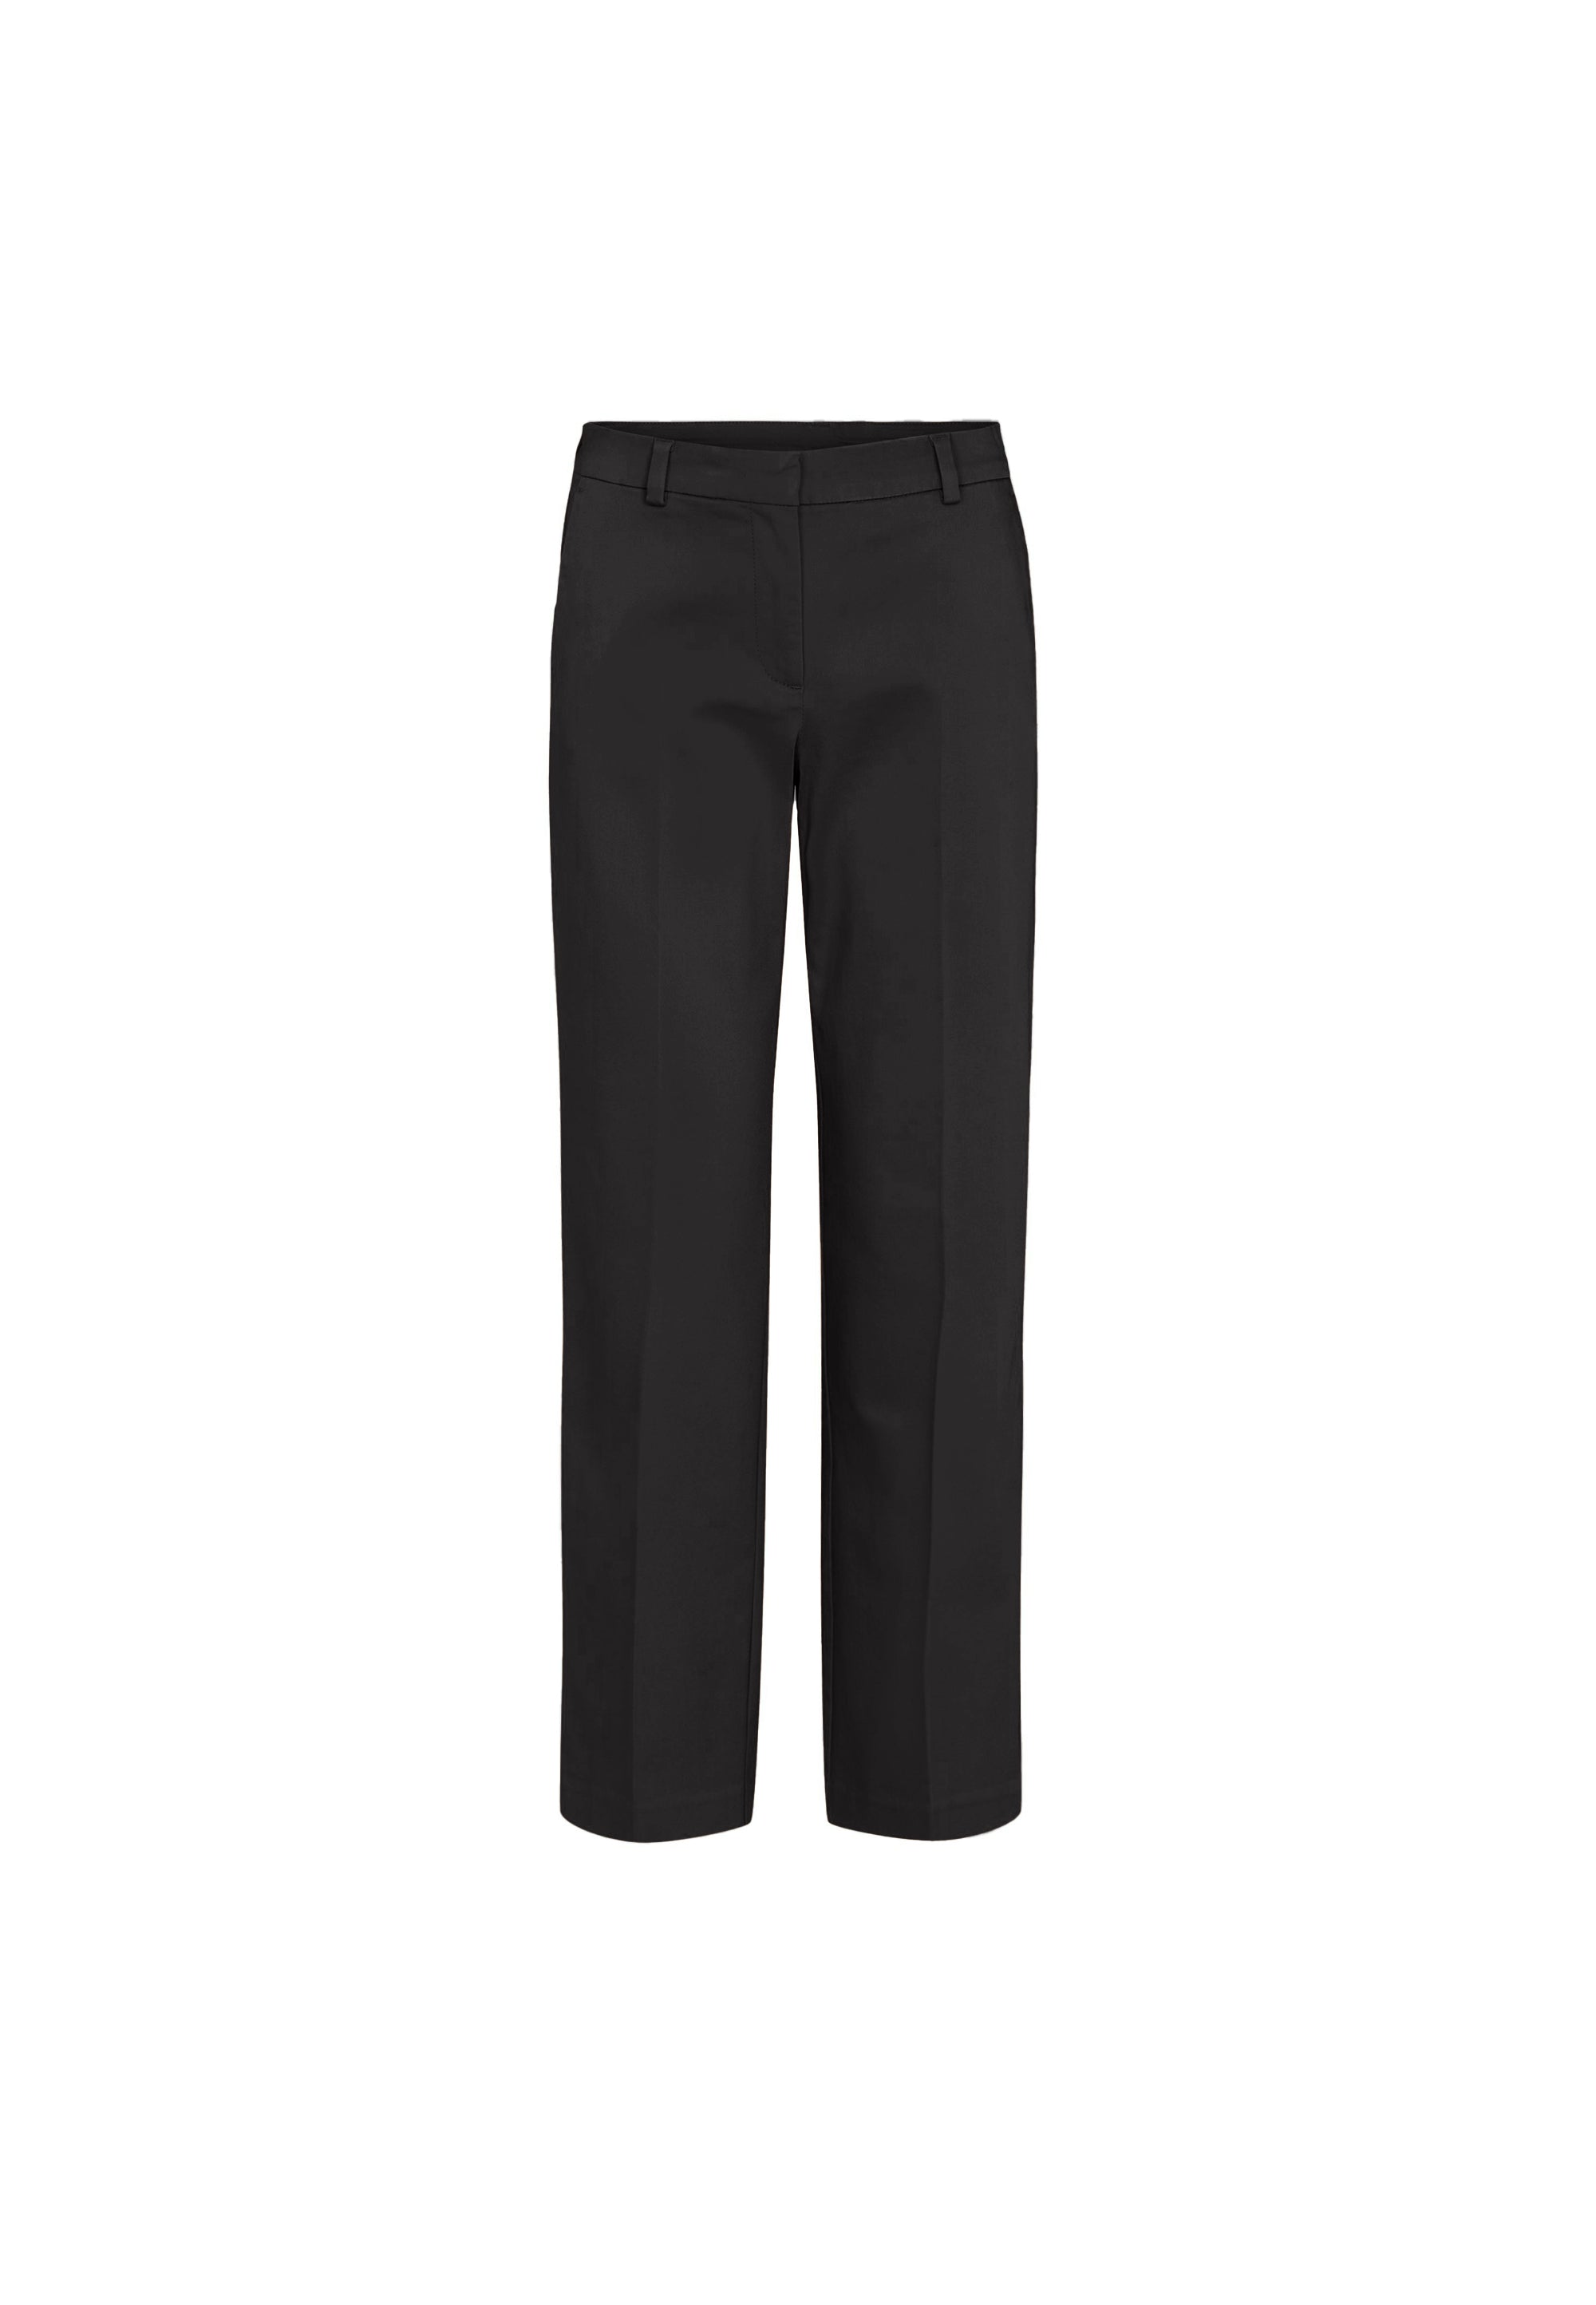 LAURIE Judy Straight - Medium Length Trousers STRAIGHT 99105 Black